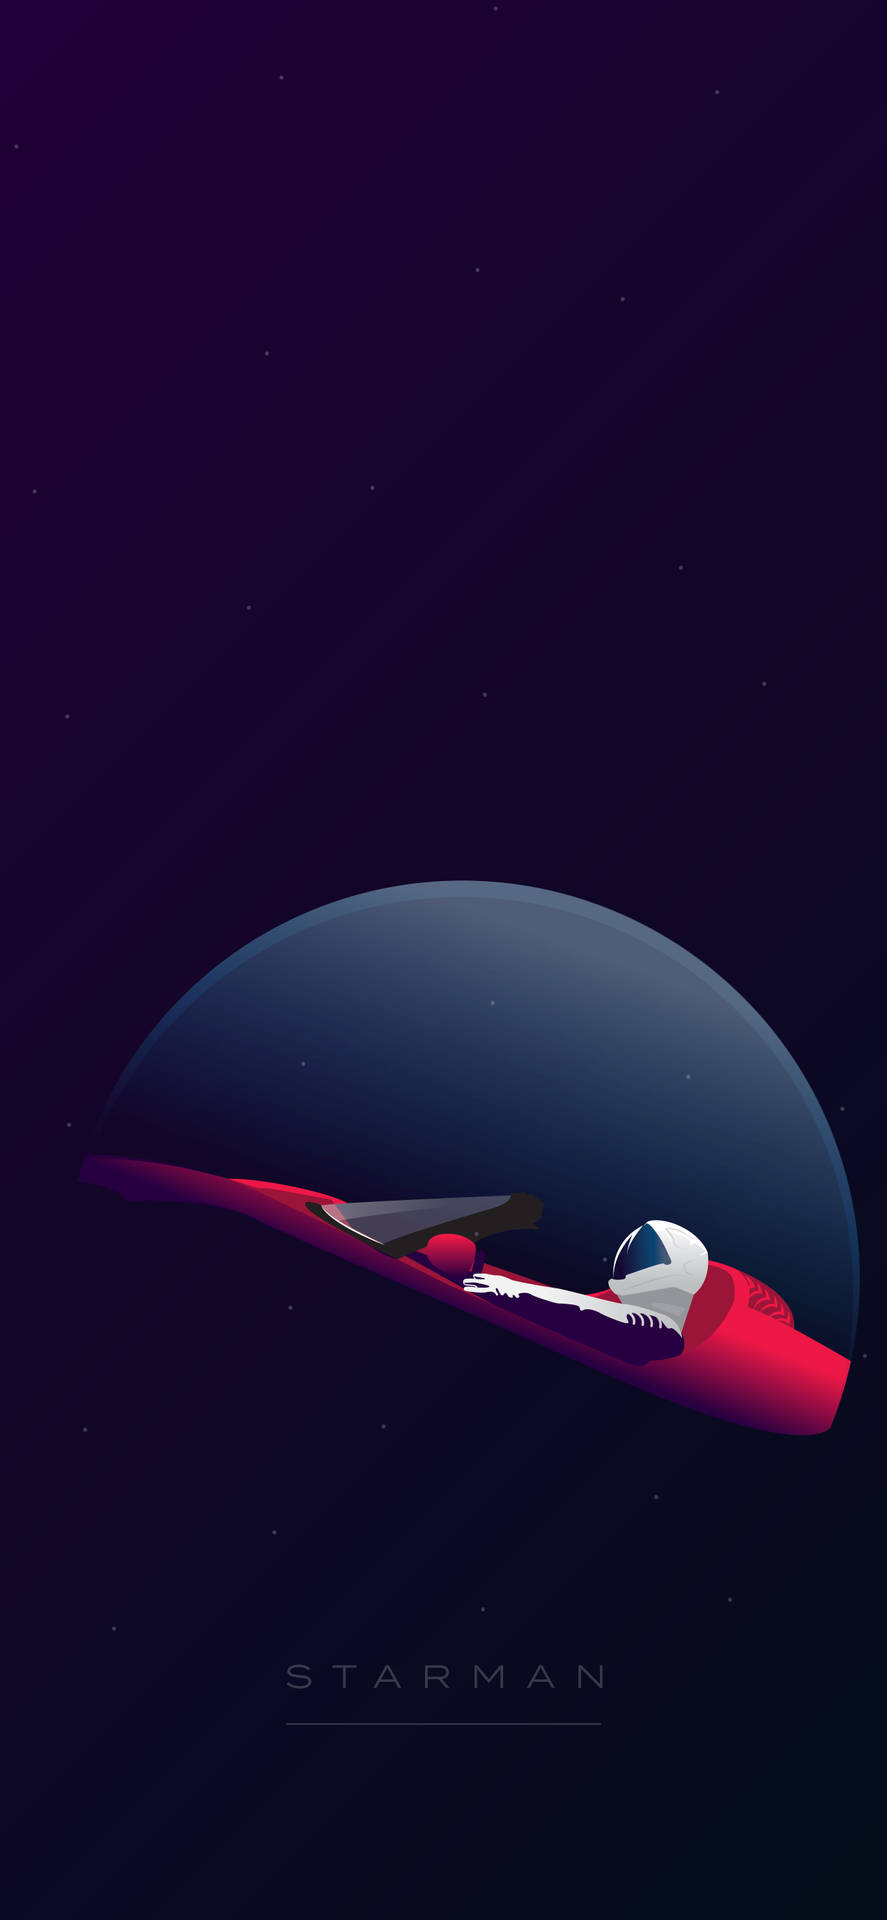 Spacex Starman Digital Art Background